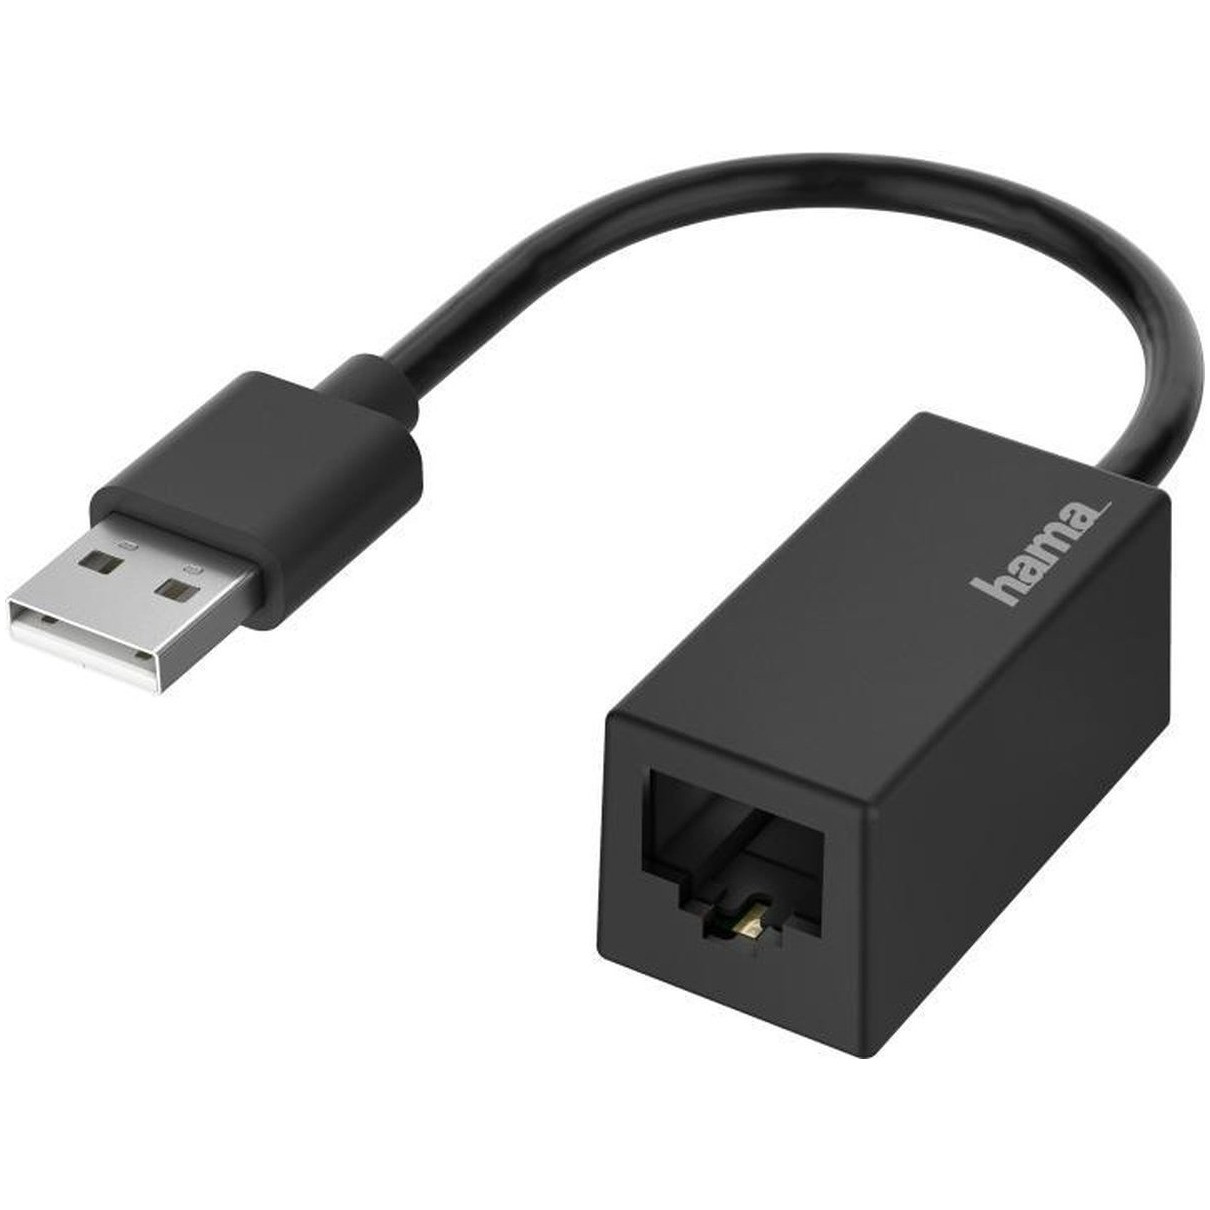 Hama Netwerk-adapter, USB-stekker - LAN/Ethernet-aansluiting, Fast-ethernet UTP kabel